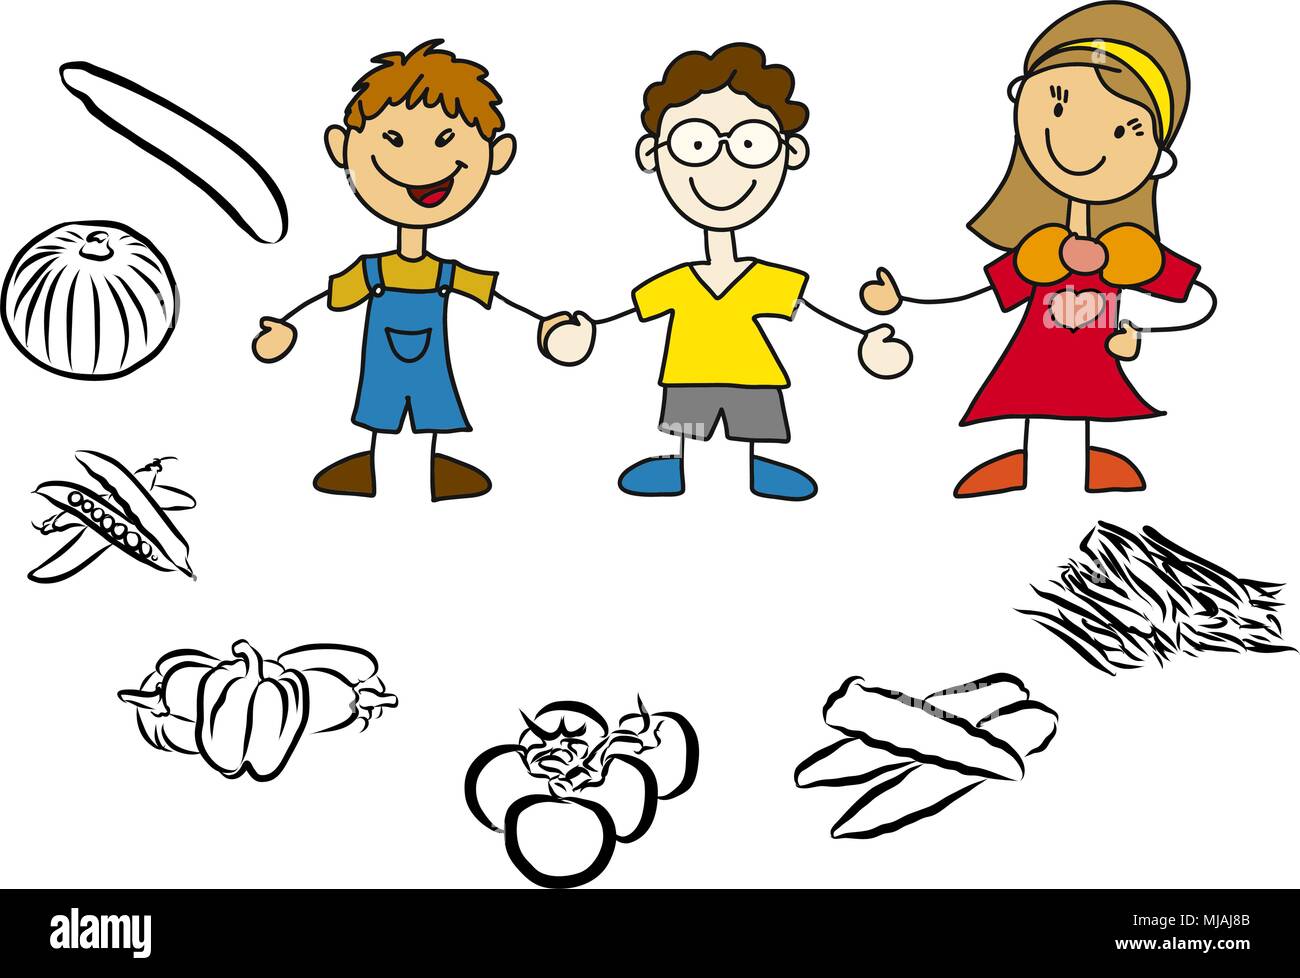 Gesunde Ernährung im Kindergarten, Kinder mit Erzieherin, Freihandskizze Vektor Illustration Stock Vector